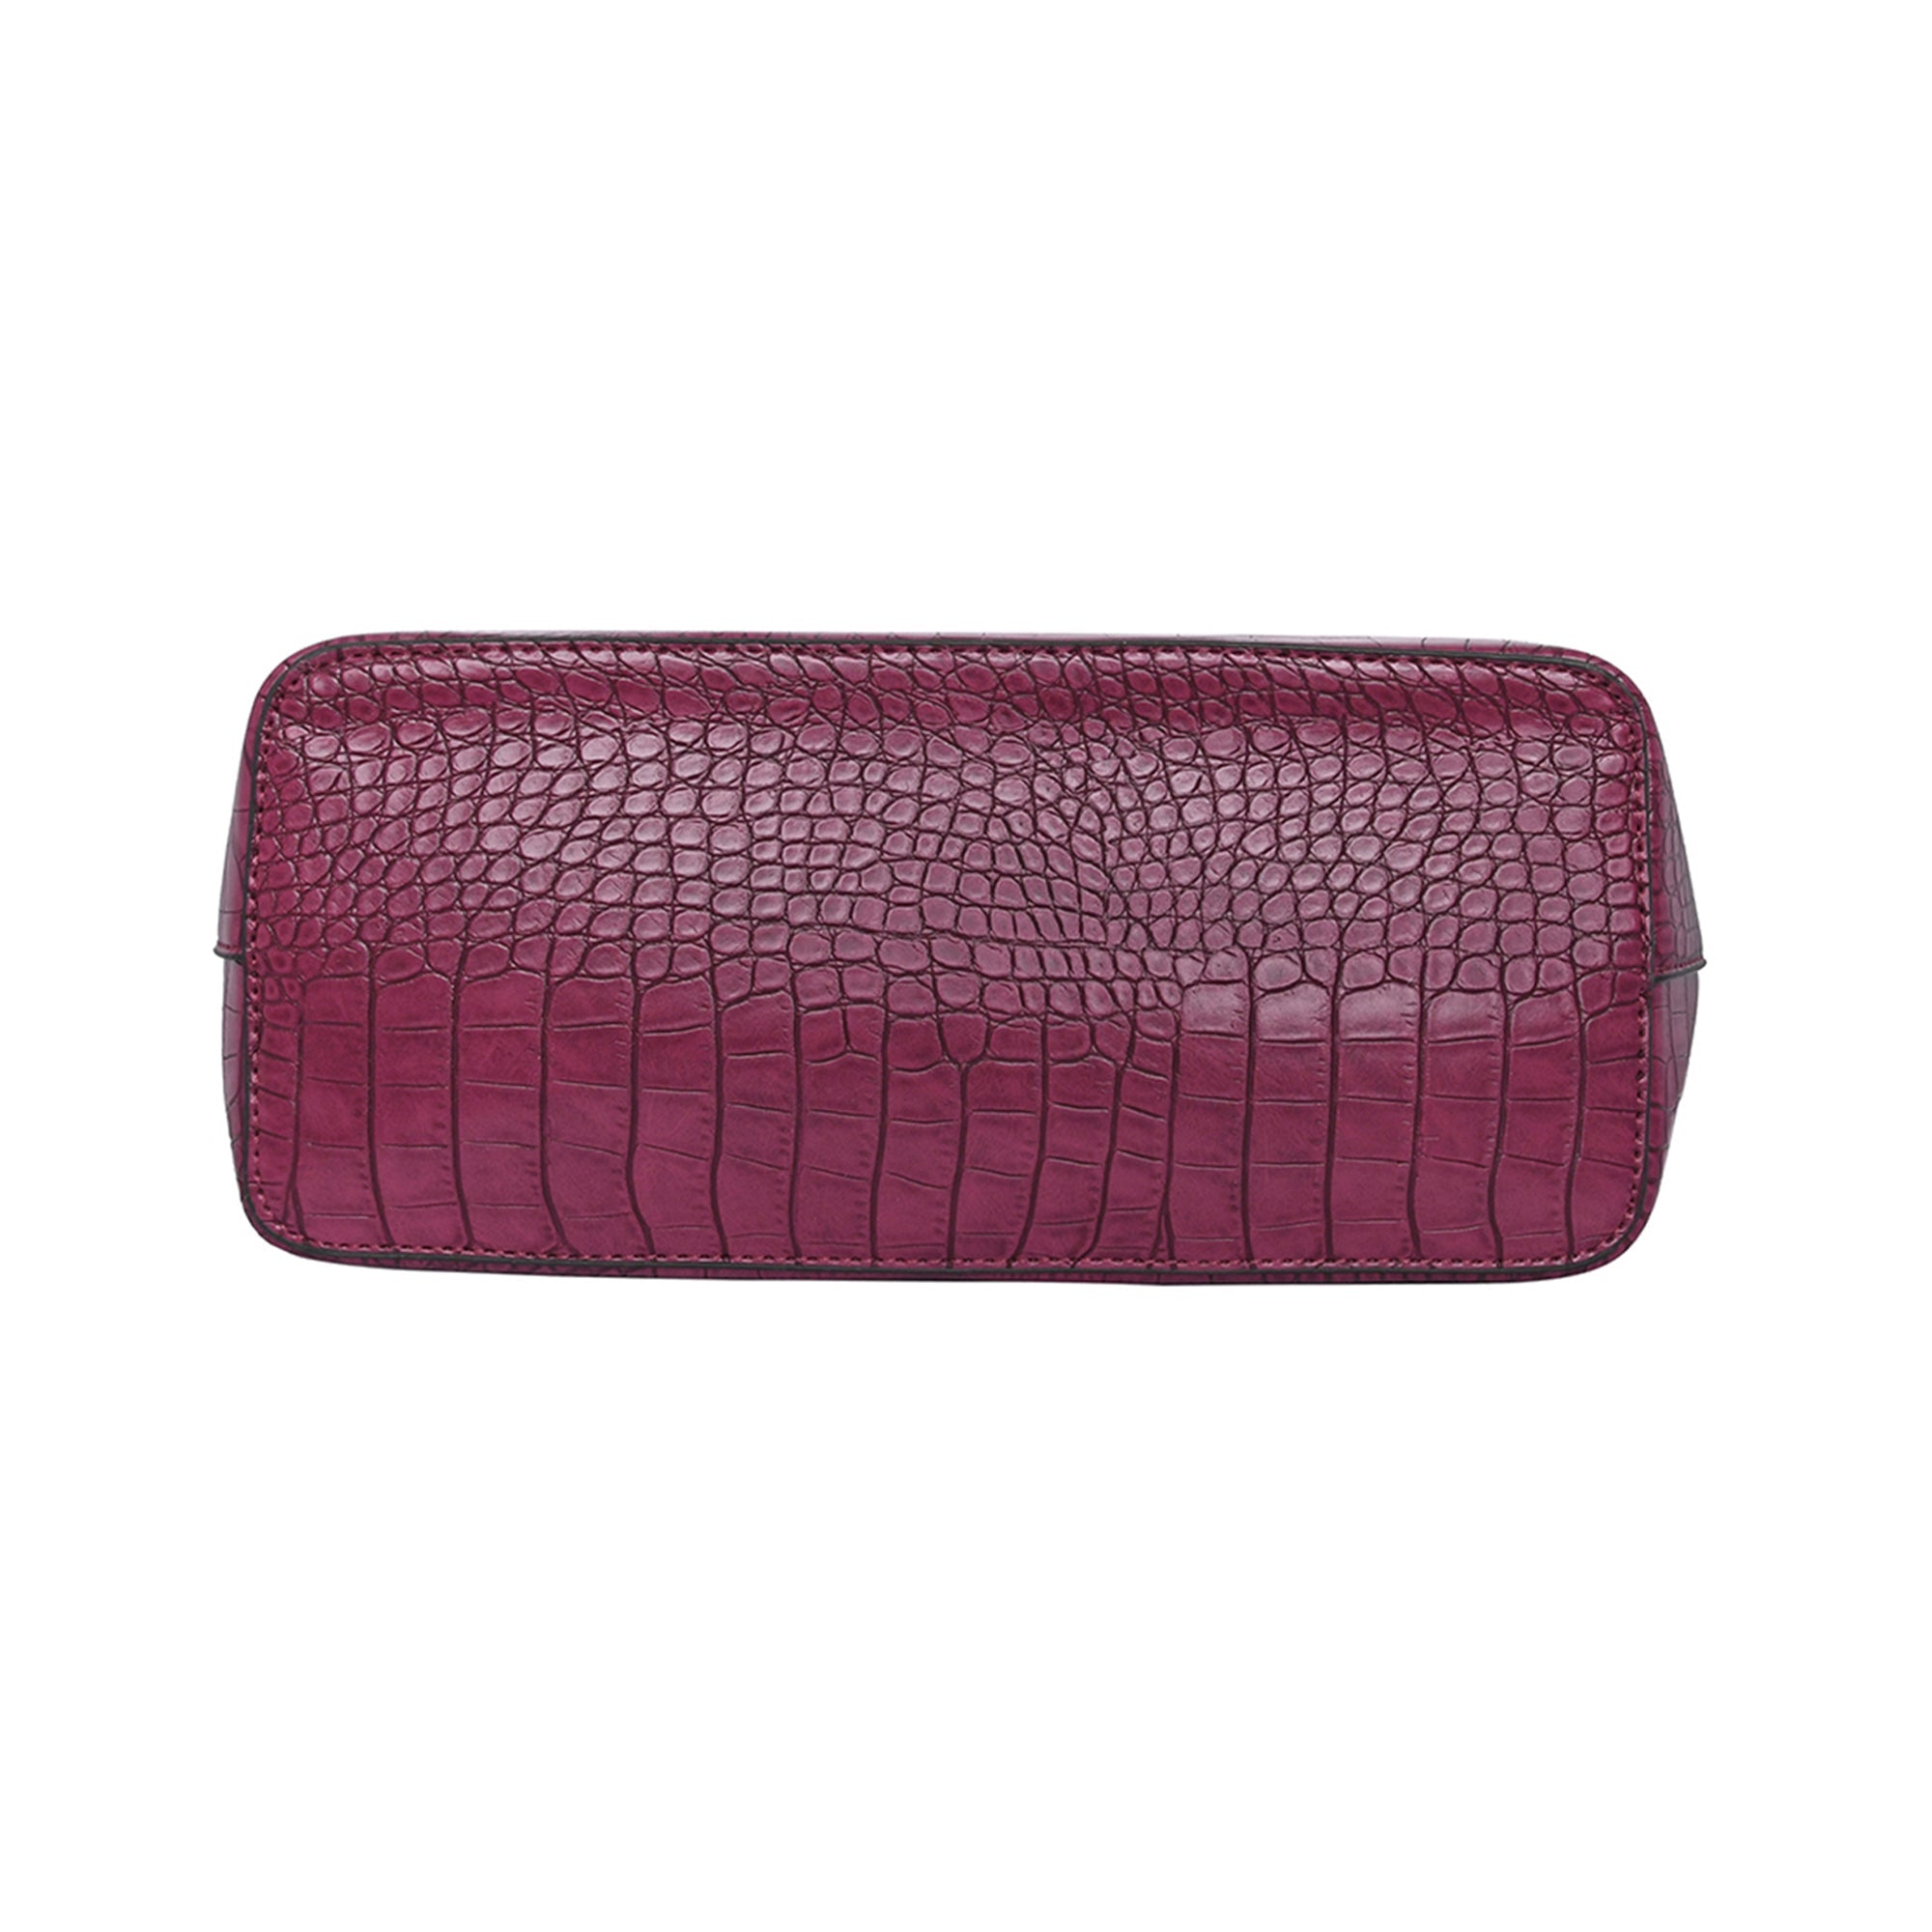 Accessorize London Women's Faux Leather Burgundy Croc texture Spacious Emily Tote Bag